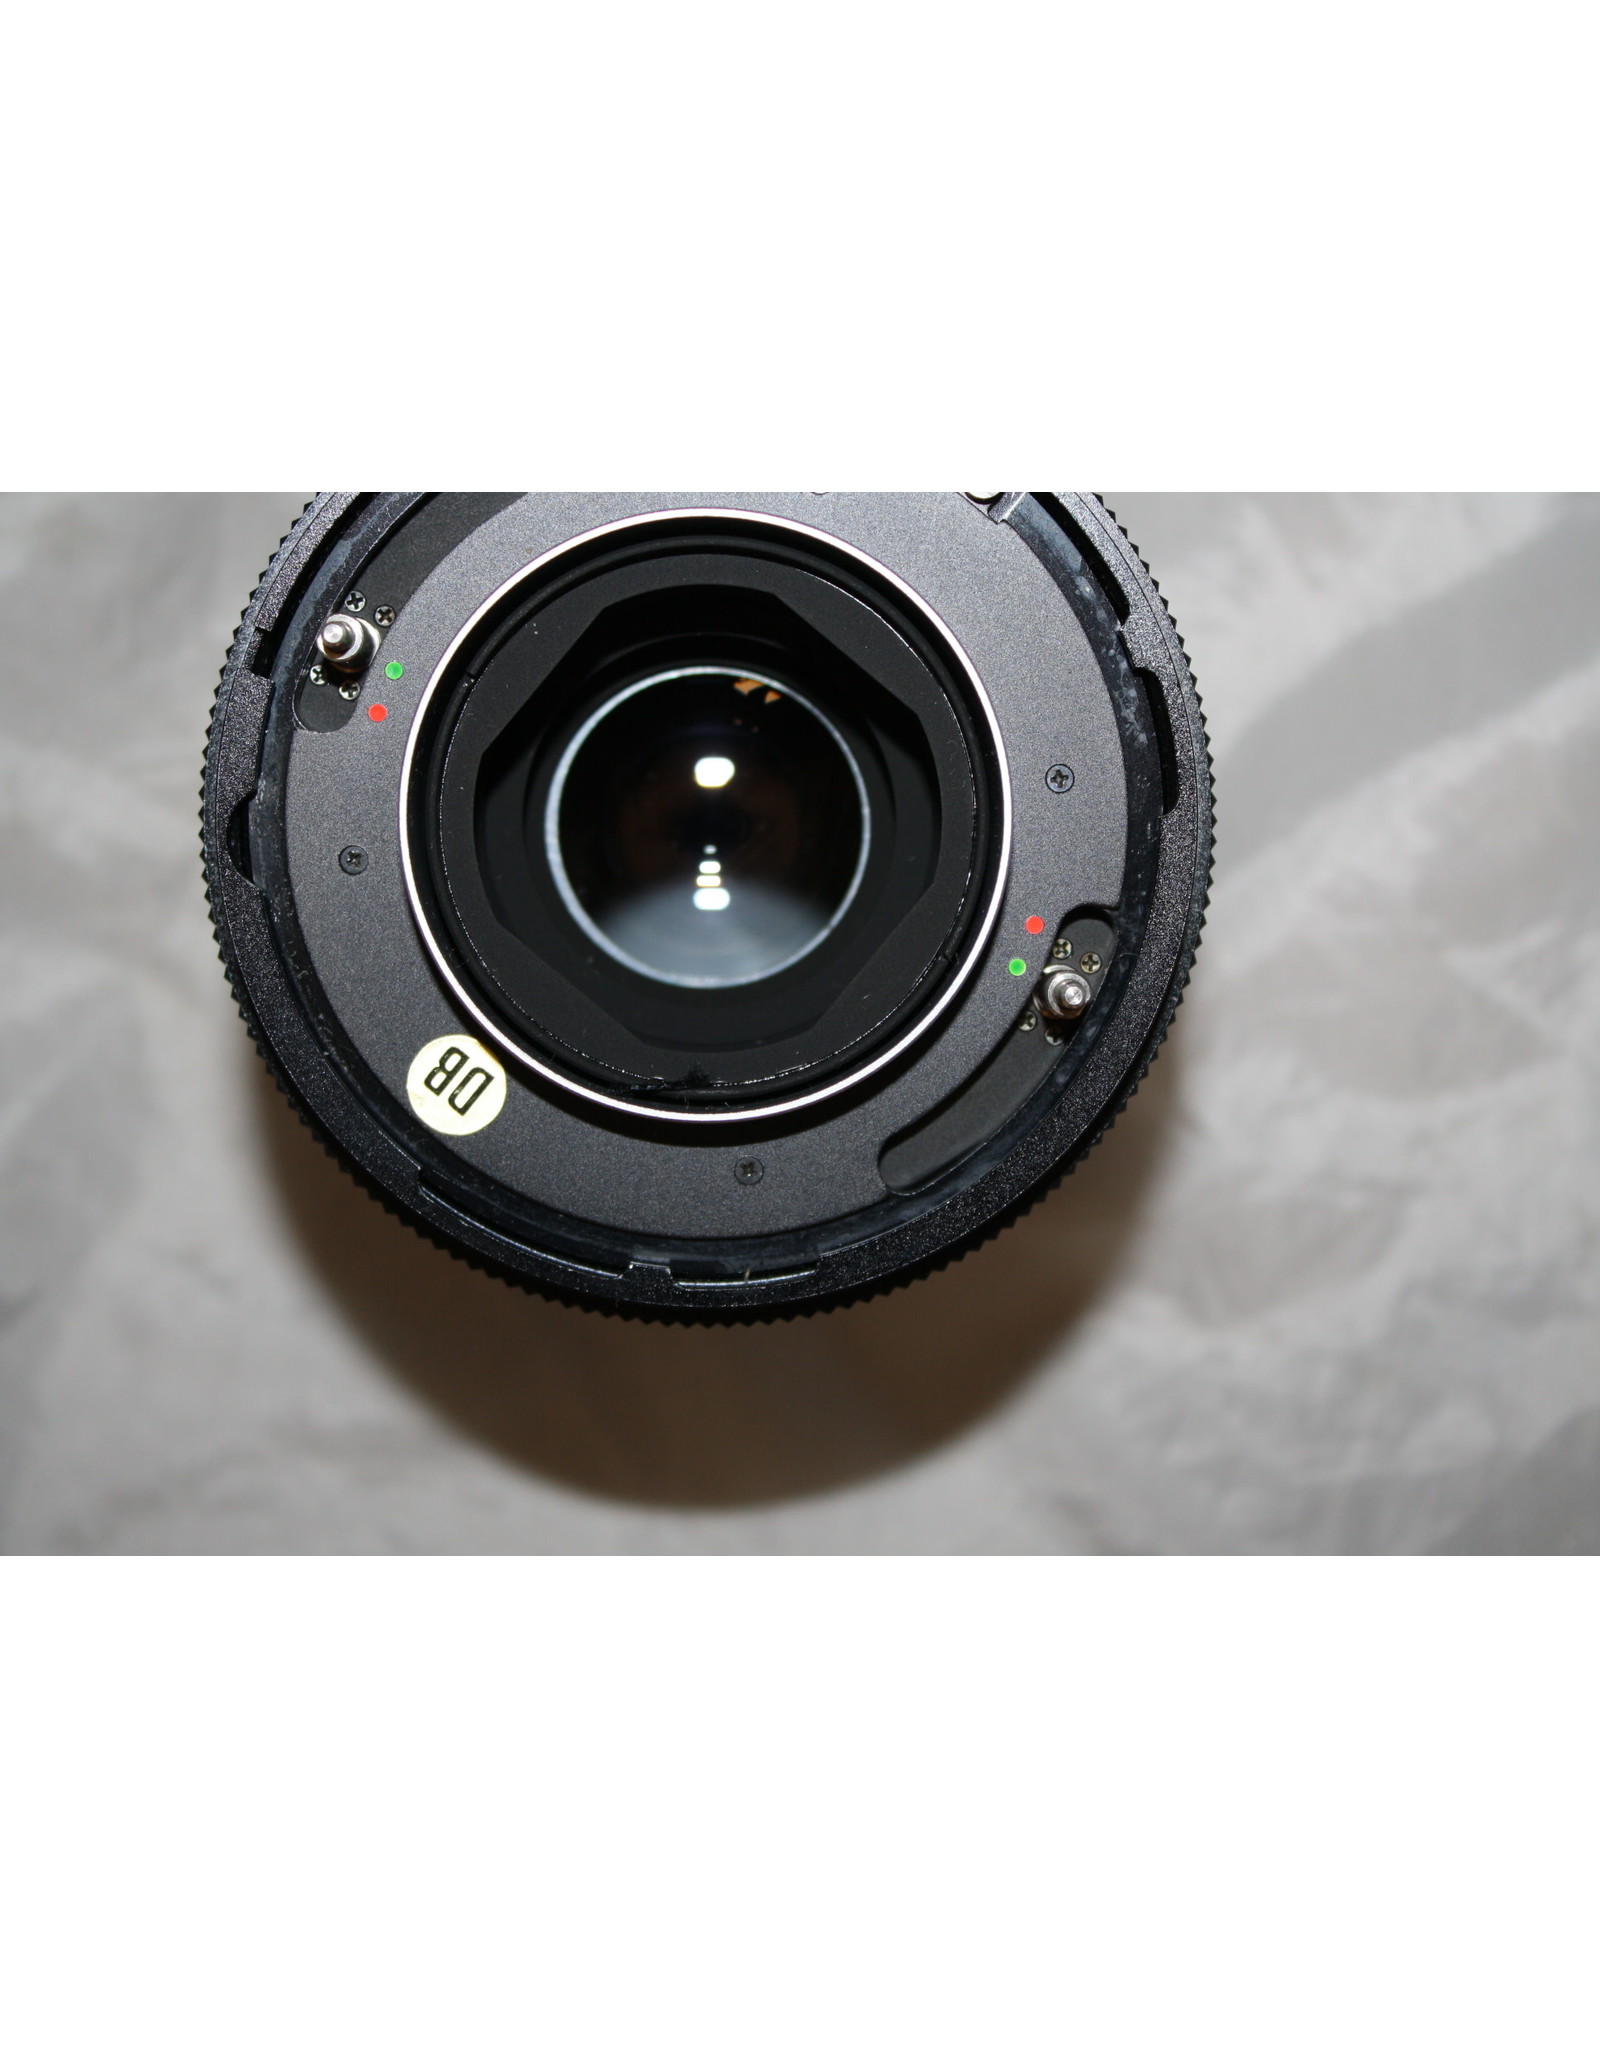 Mamiya Mamiya Sekor 180mm f/4.5 Lens For RB67 Pro S SD